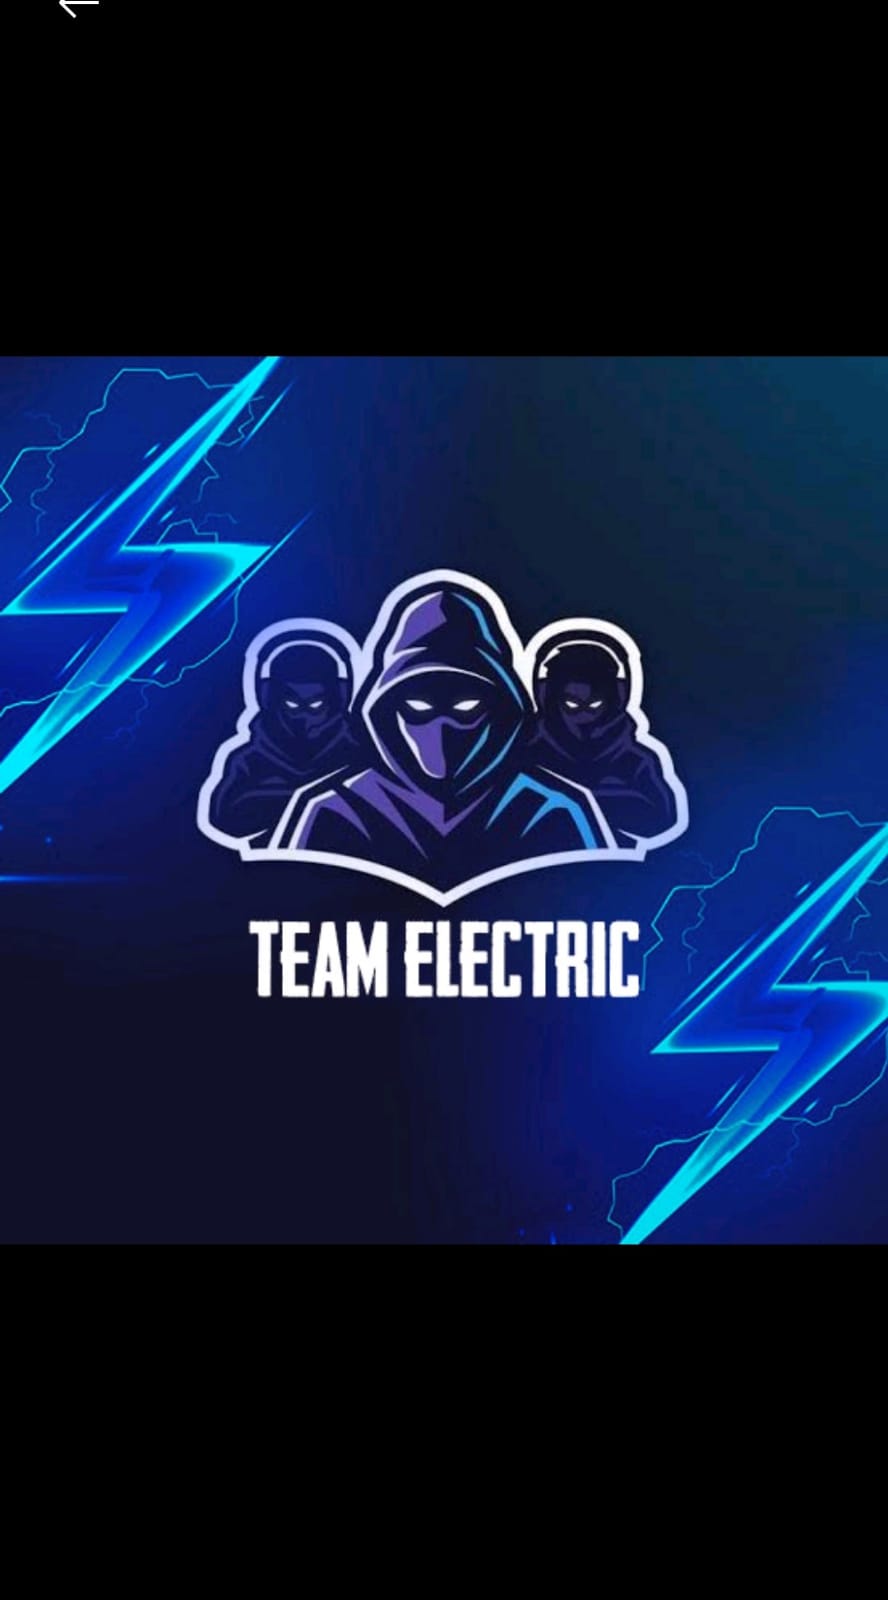 Team Electric logo